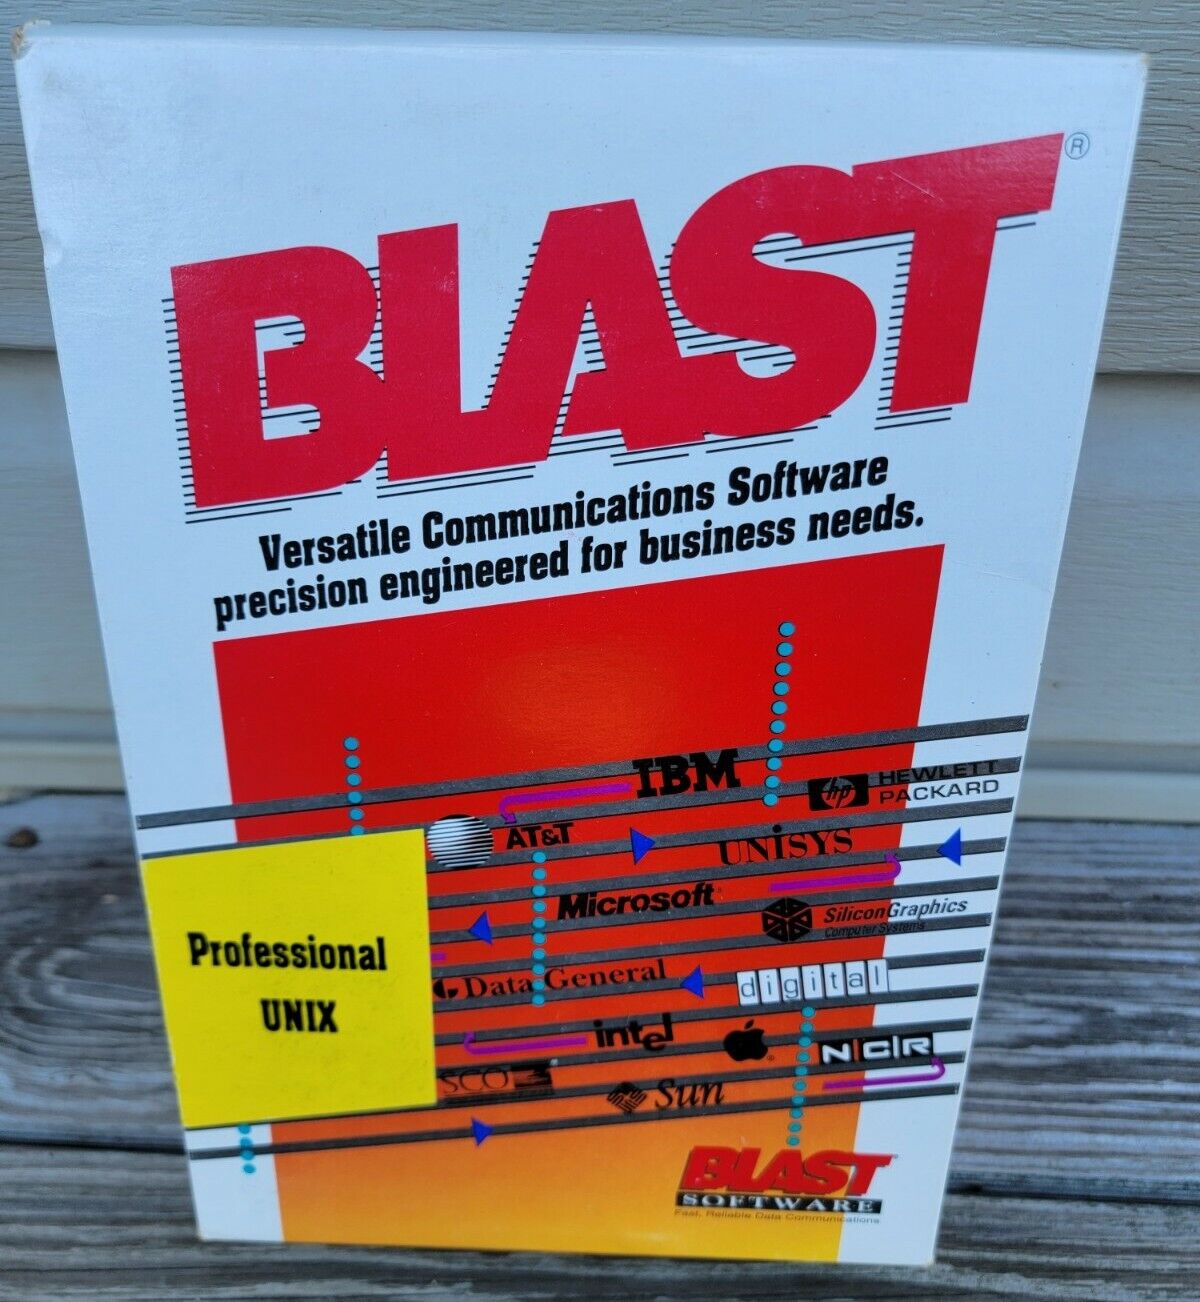 Vtg Blast Versatile Communications Software Professional UNIX 3/486 UNX/XEN 10.7